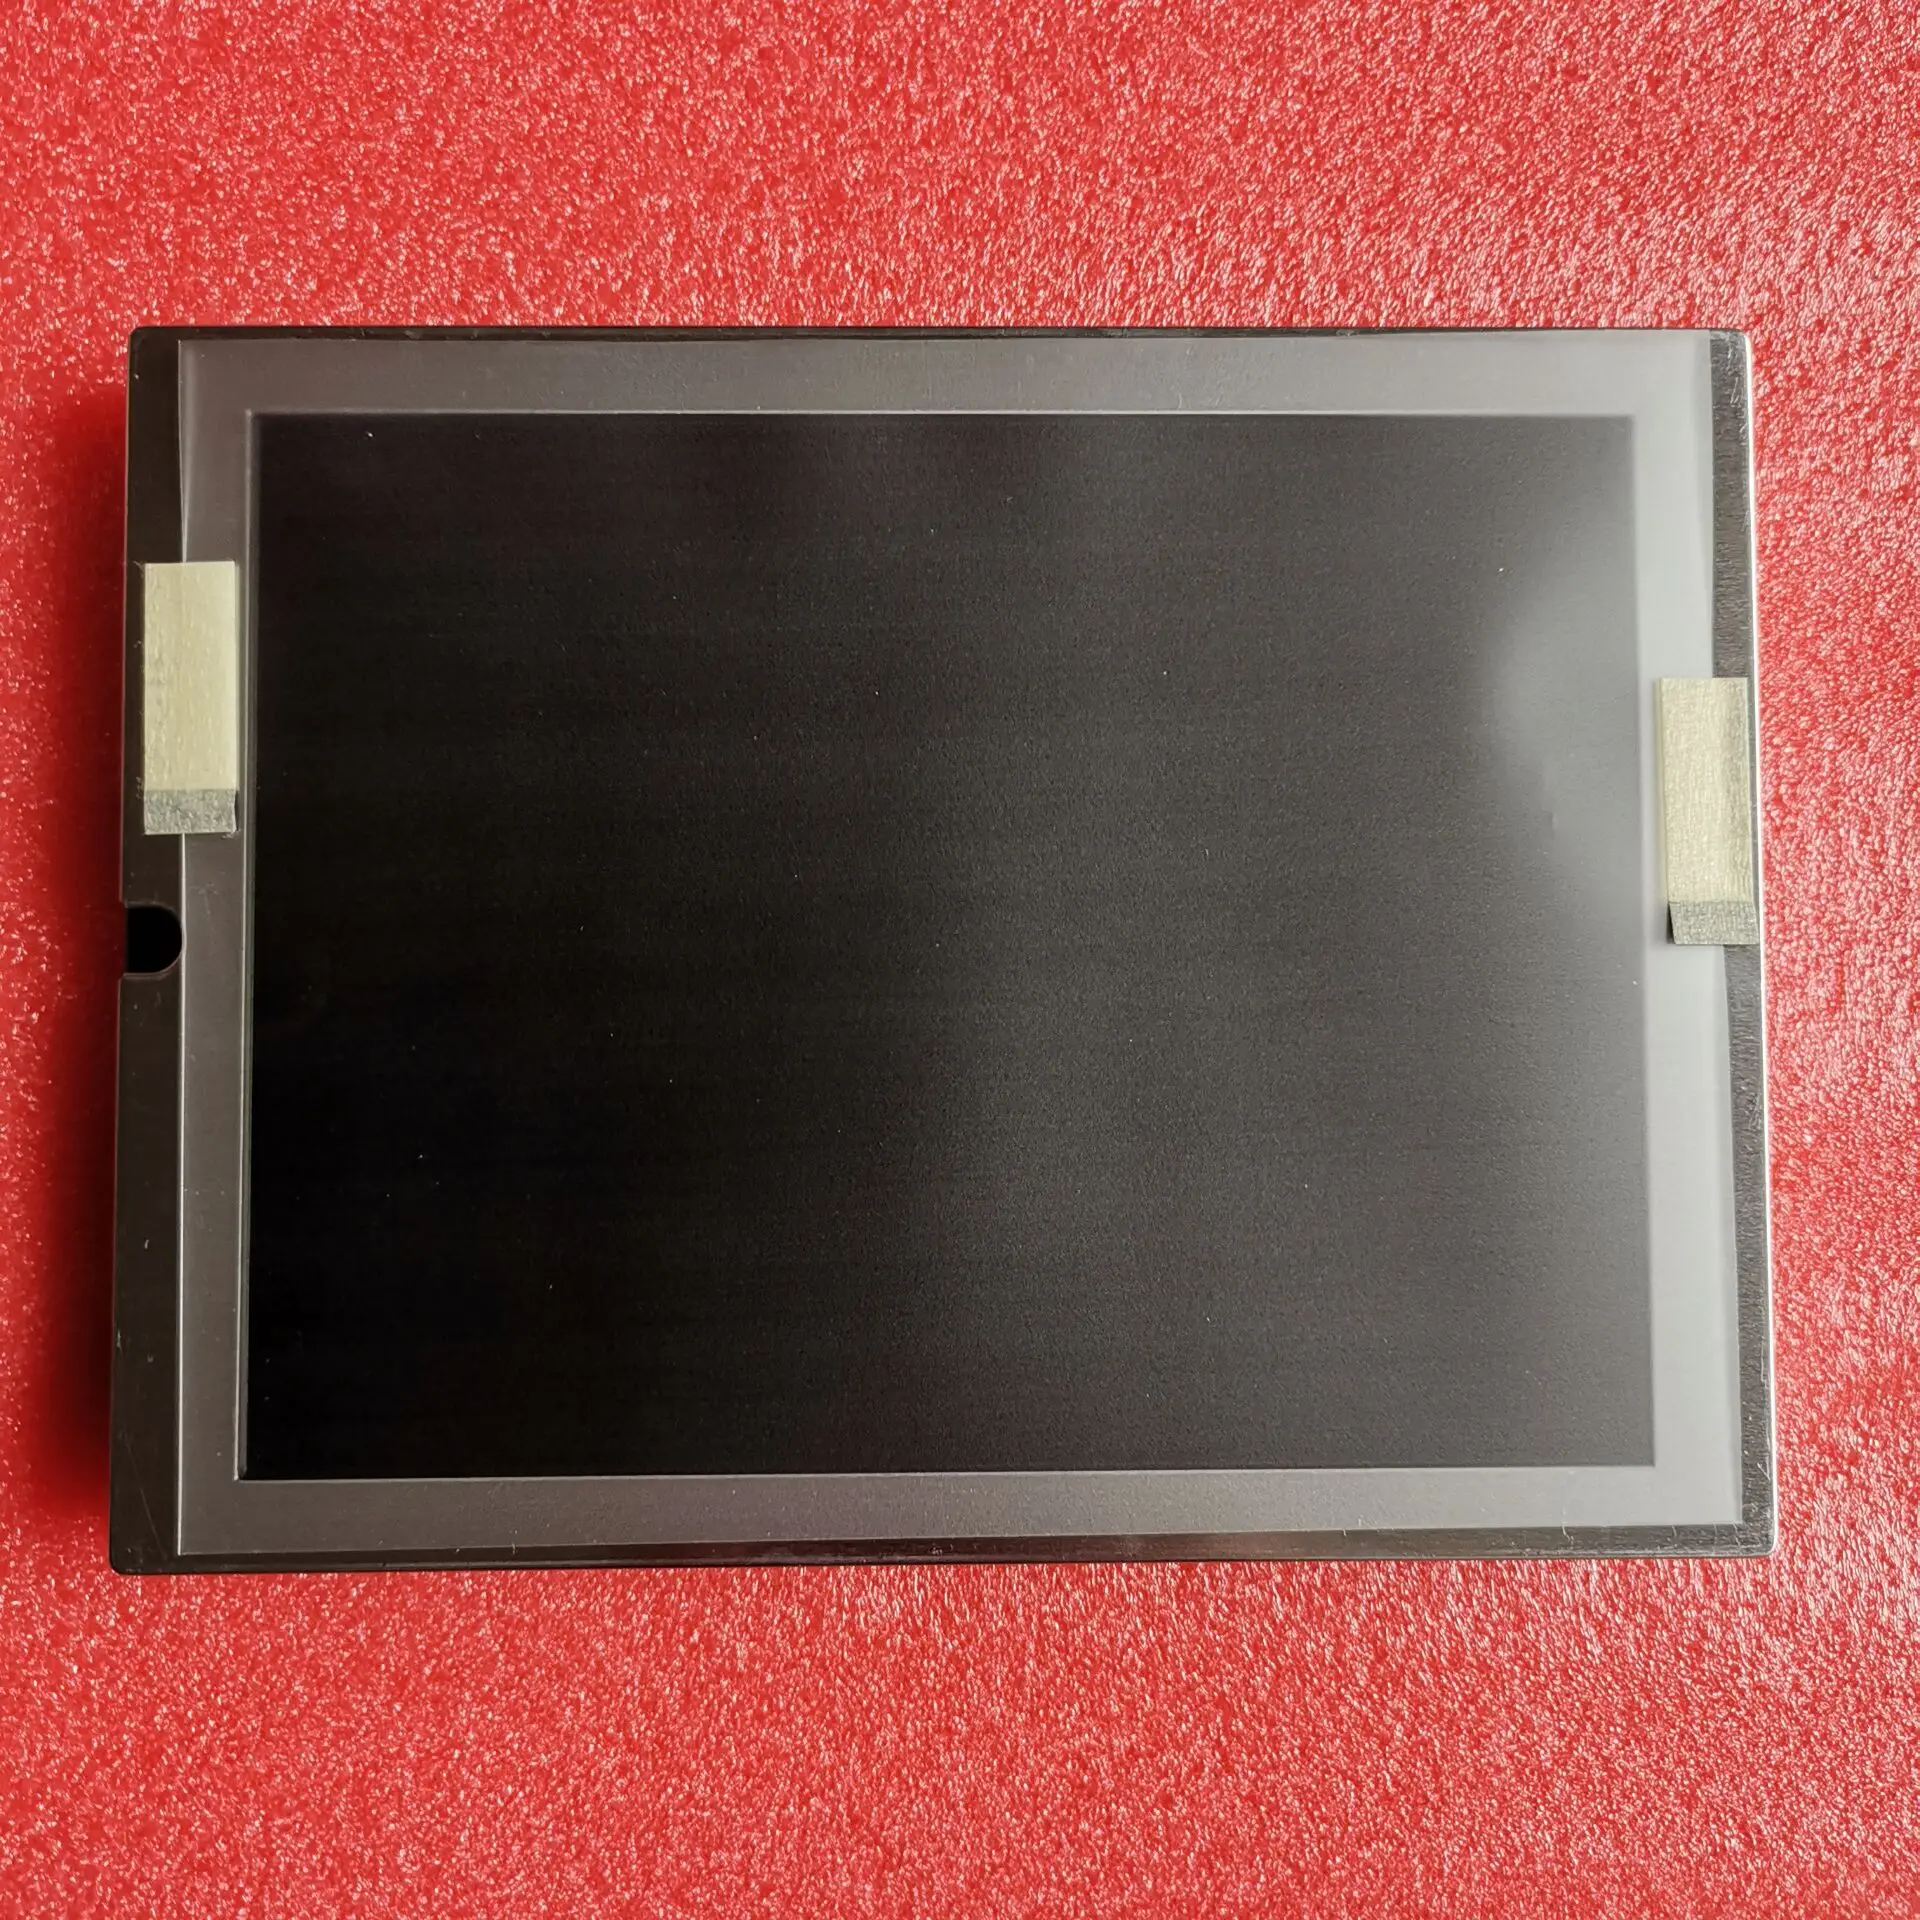 

original LQ075V3DG01 7.5'' LCD screen